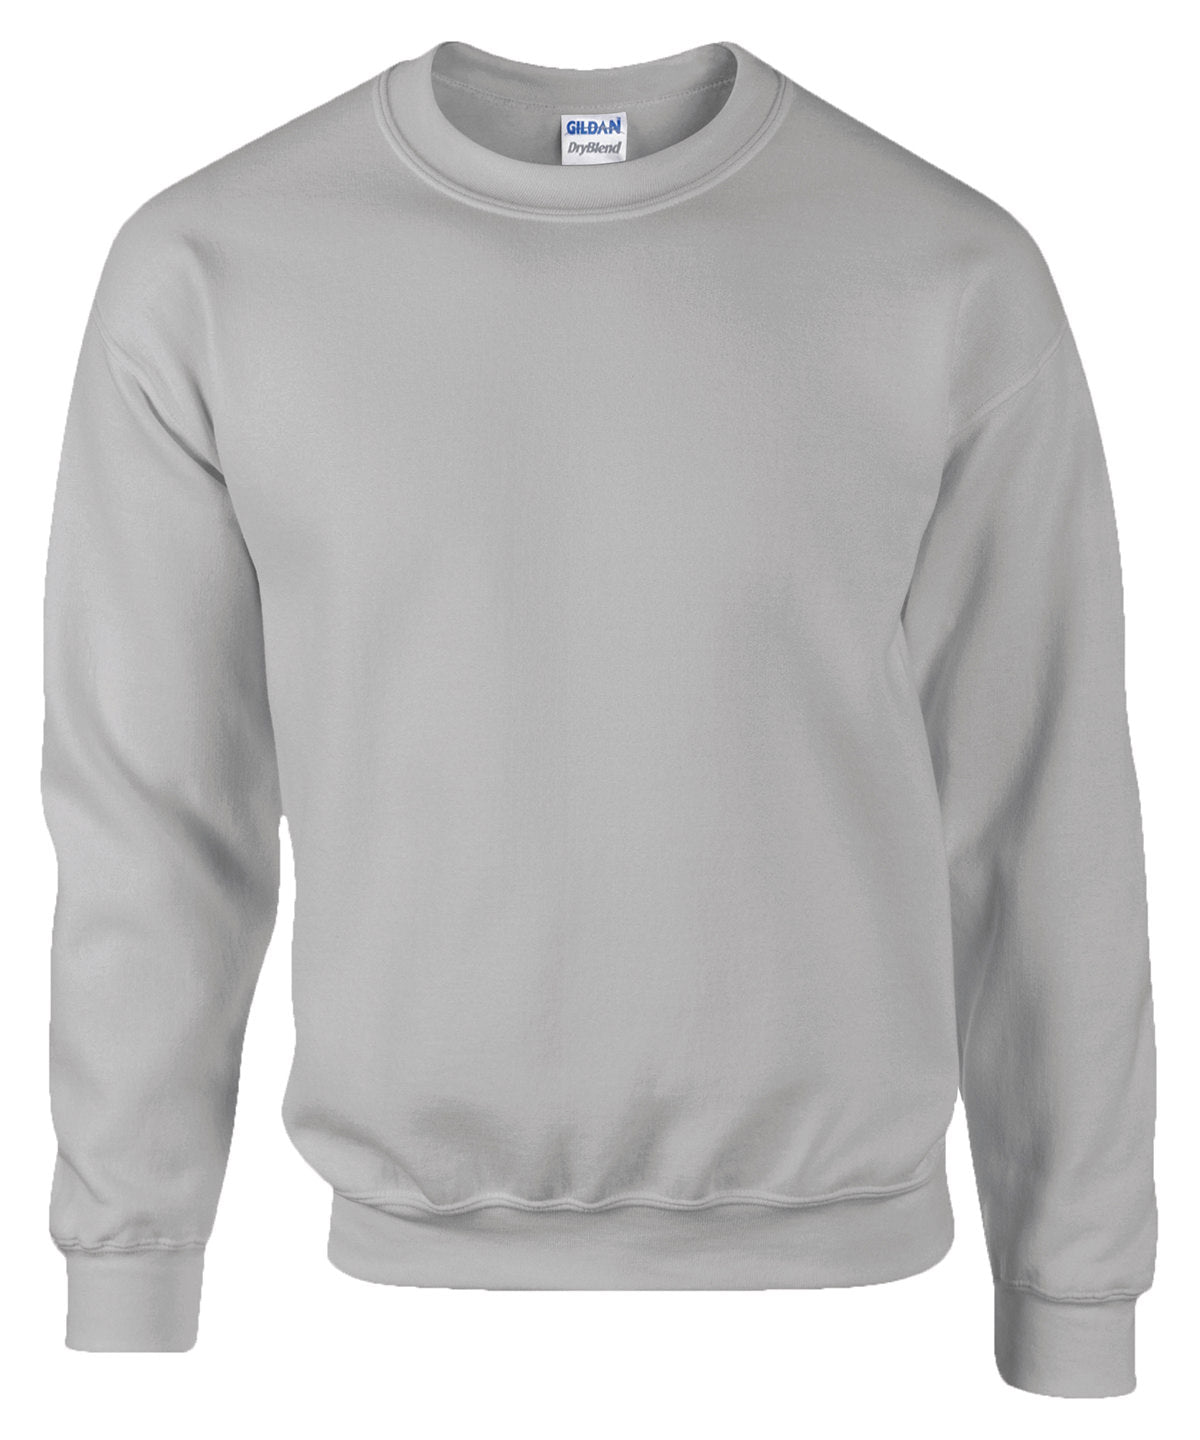 Personalised Sweatshirts - Black Gildan DryBlend® adult crew neck sweatshirt